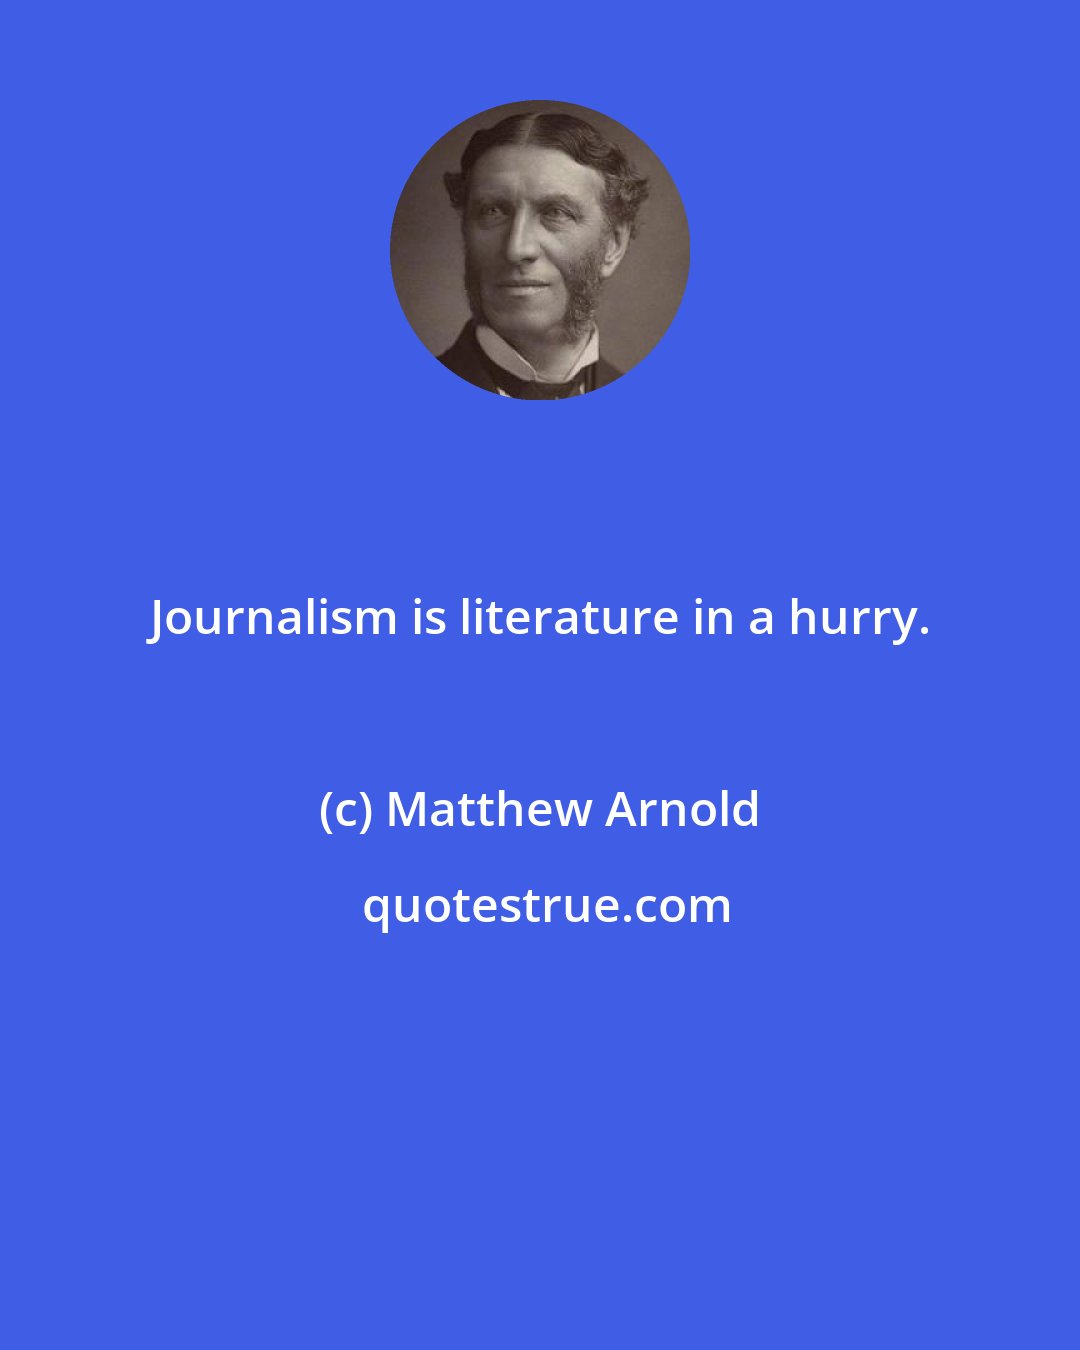 Matthew Arnold: Journalism is literature in a hurry.